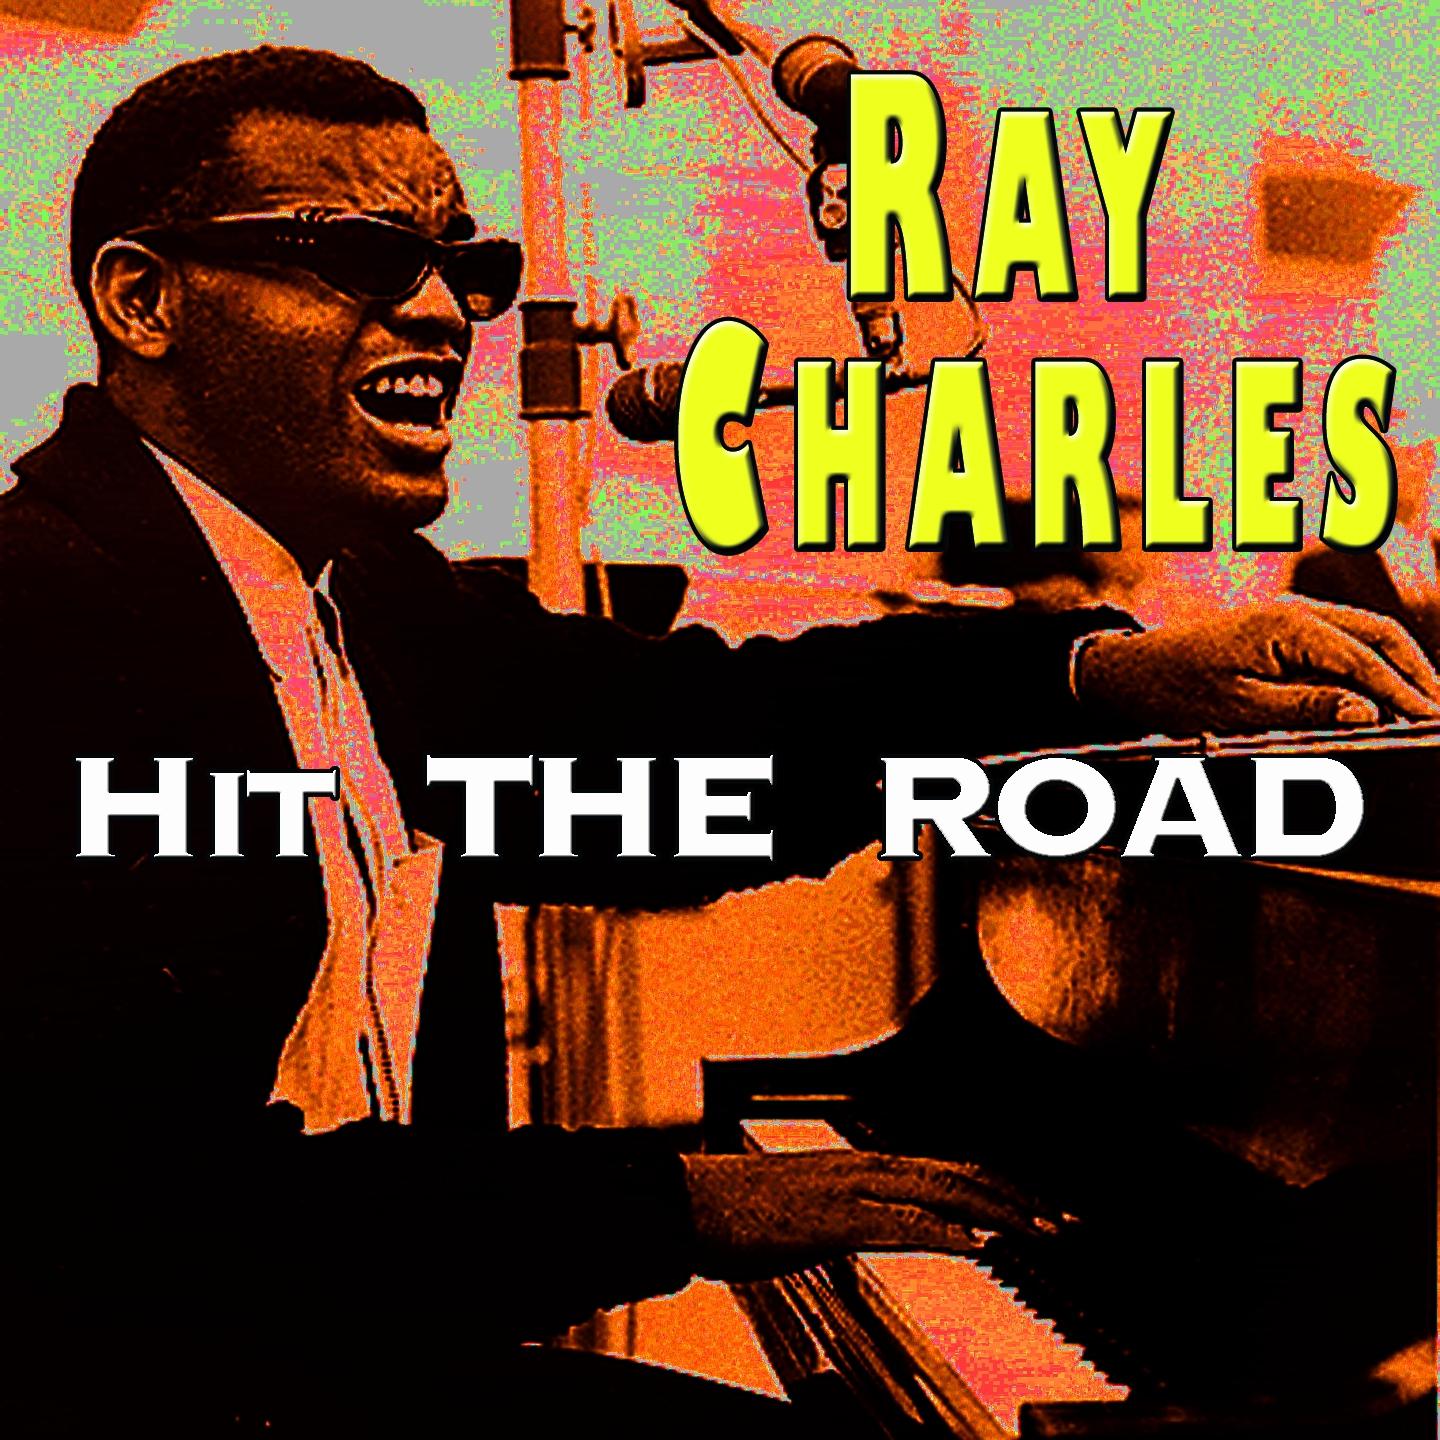 Постер альбома The Great Ray Charles